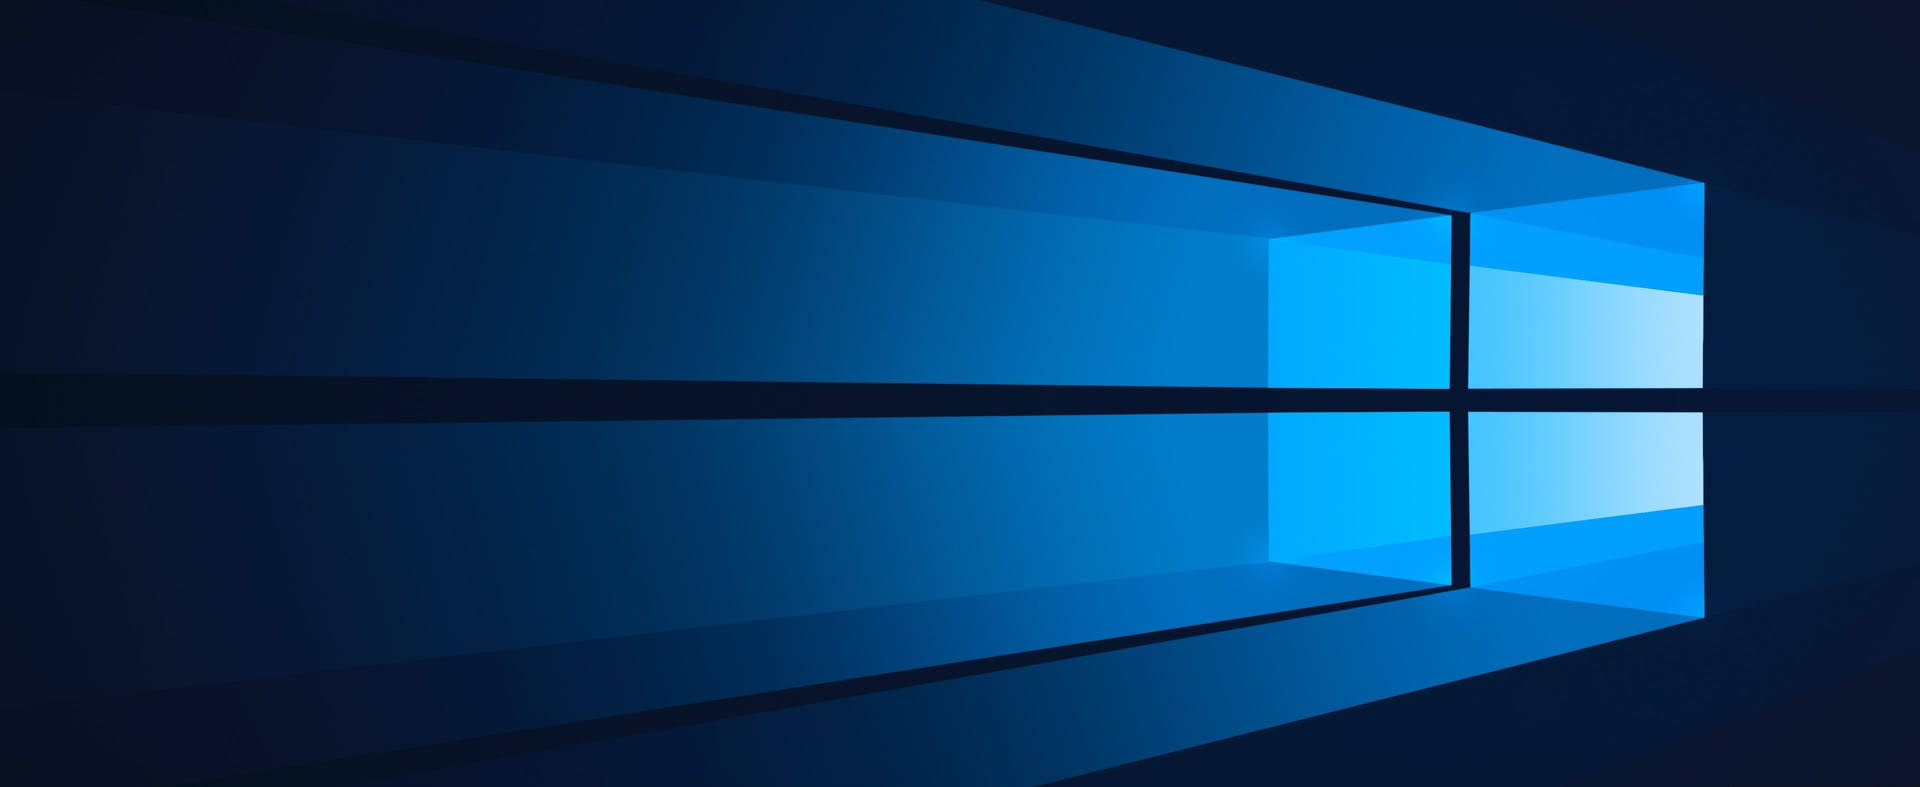 Windows 10 Logo With Blue Light Wallpaper